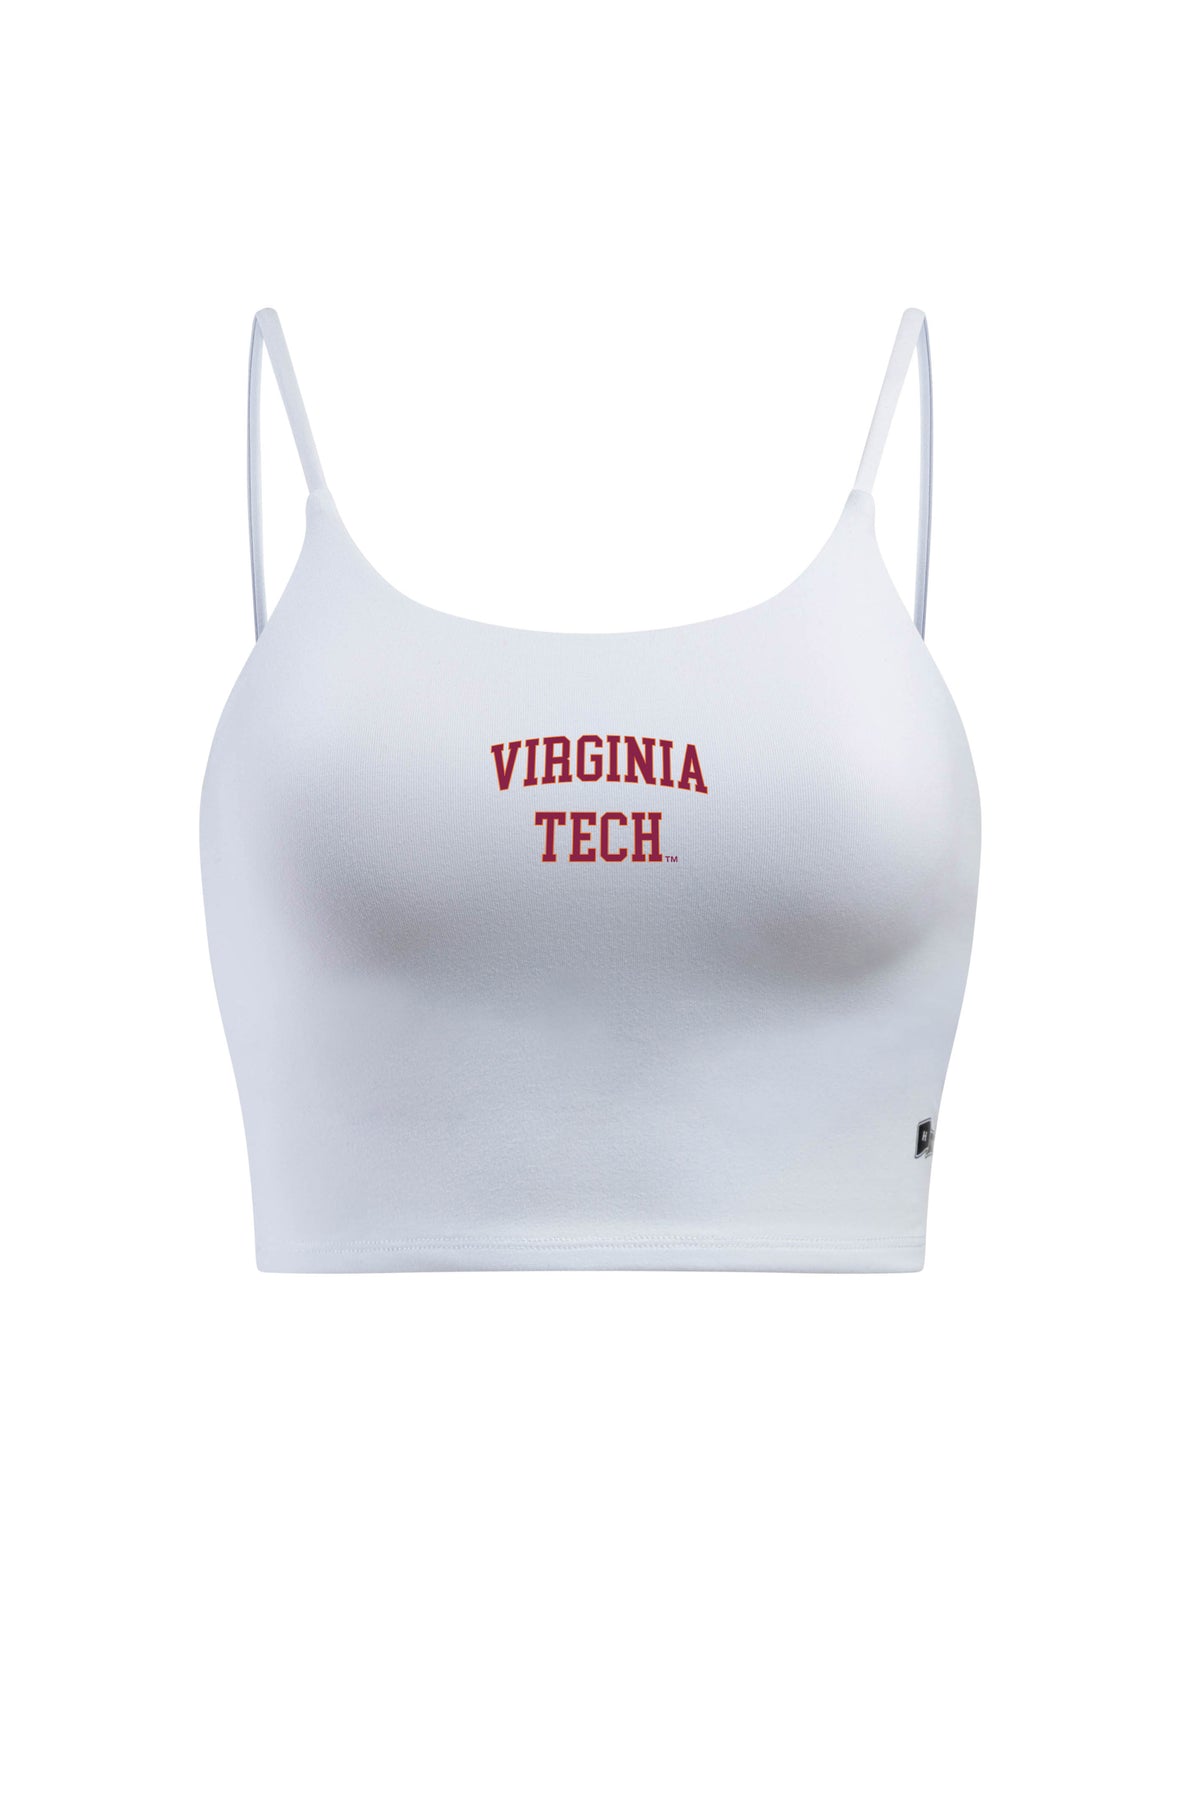 University Virginia Tech Bra Tank Top